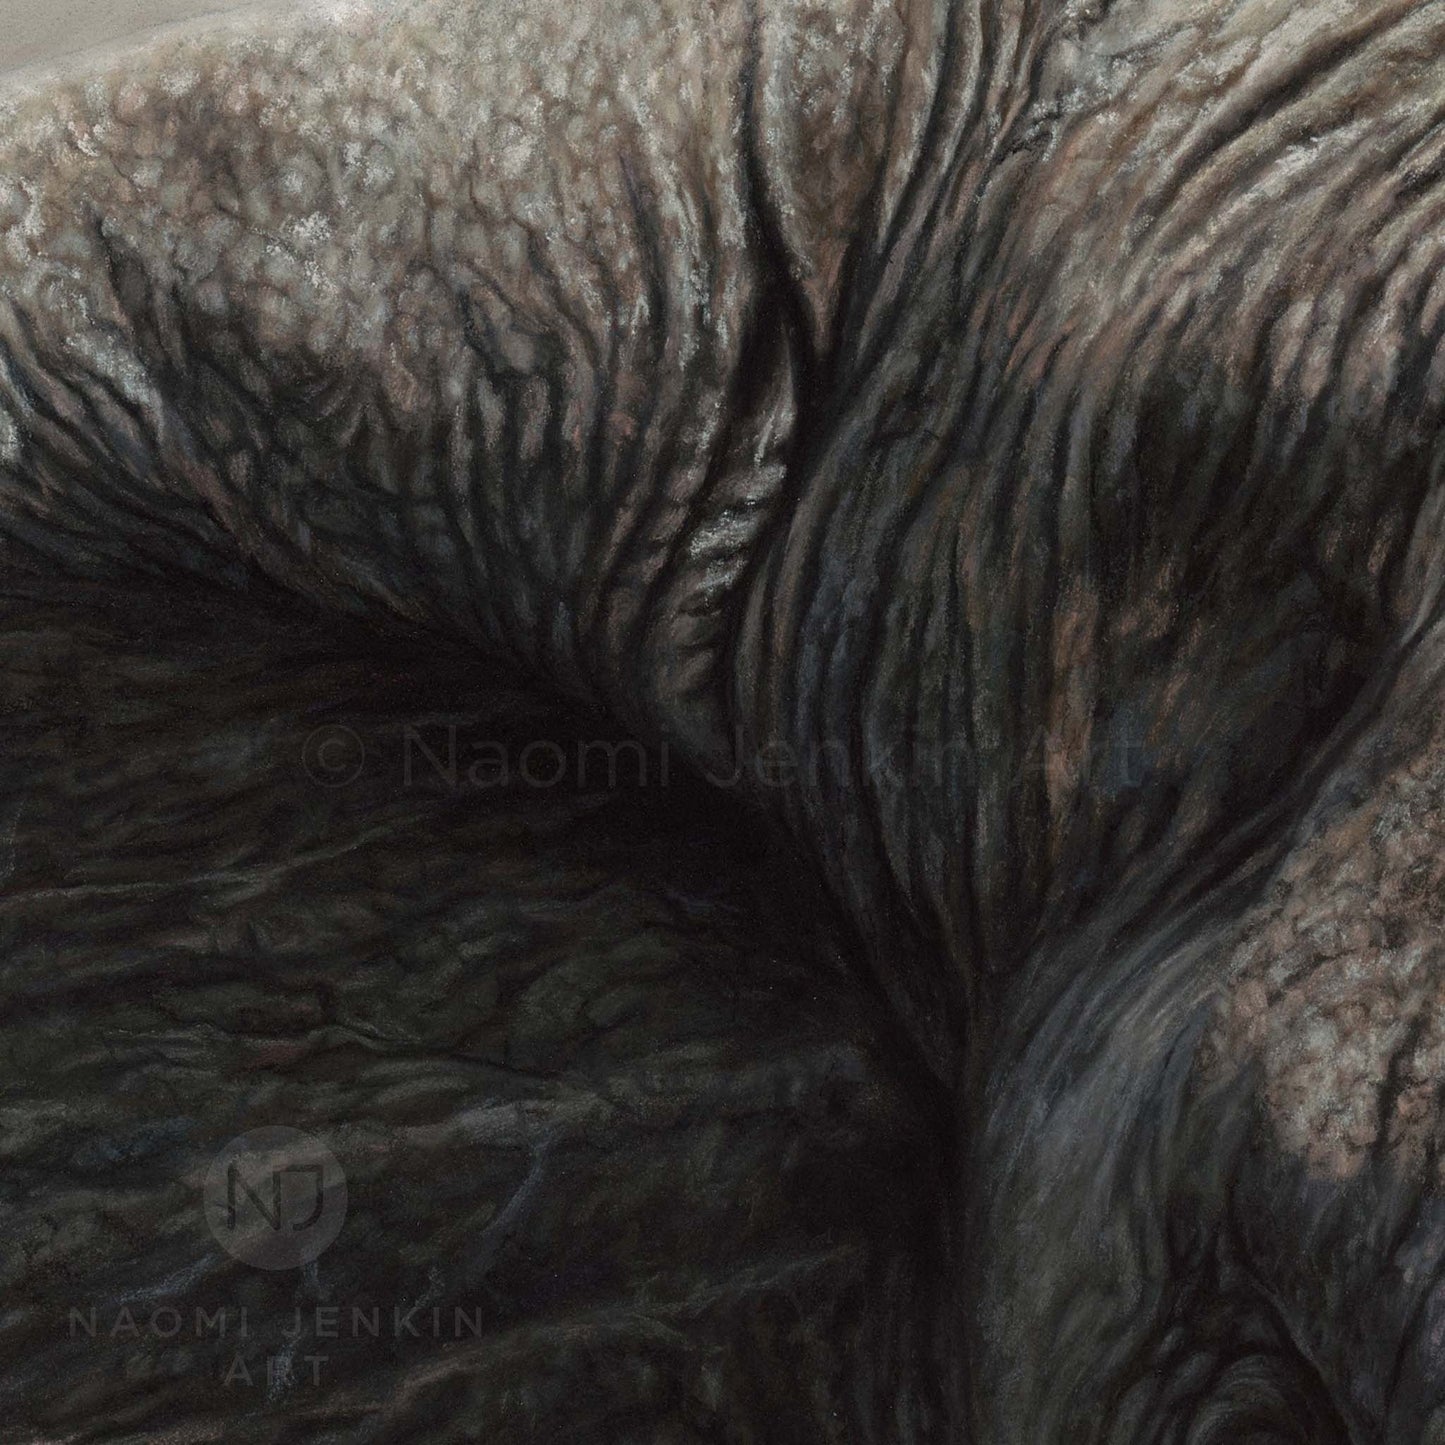 African elephant art print by Naomi Jenkin Art. 